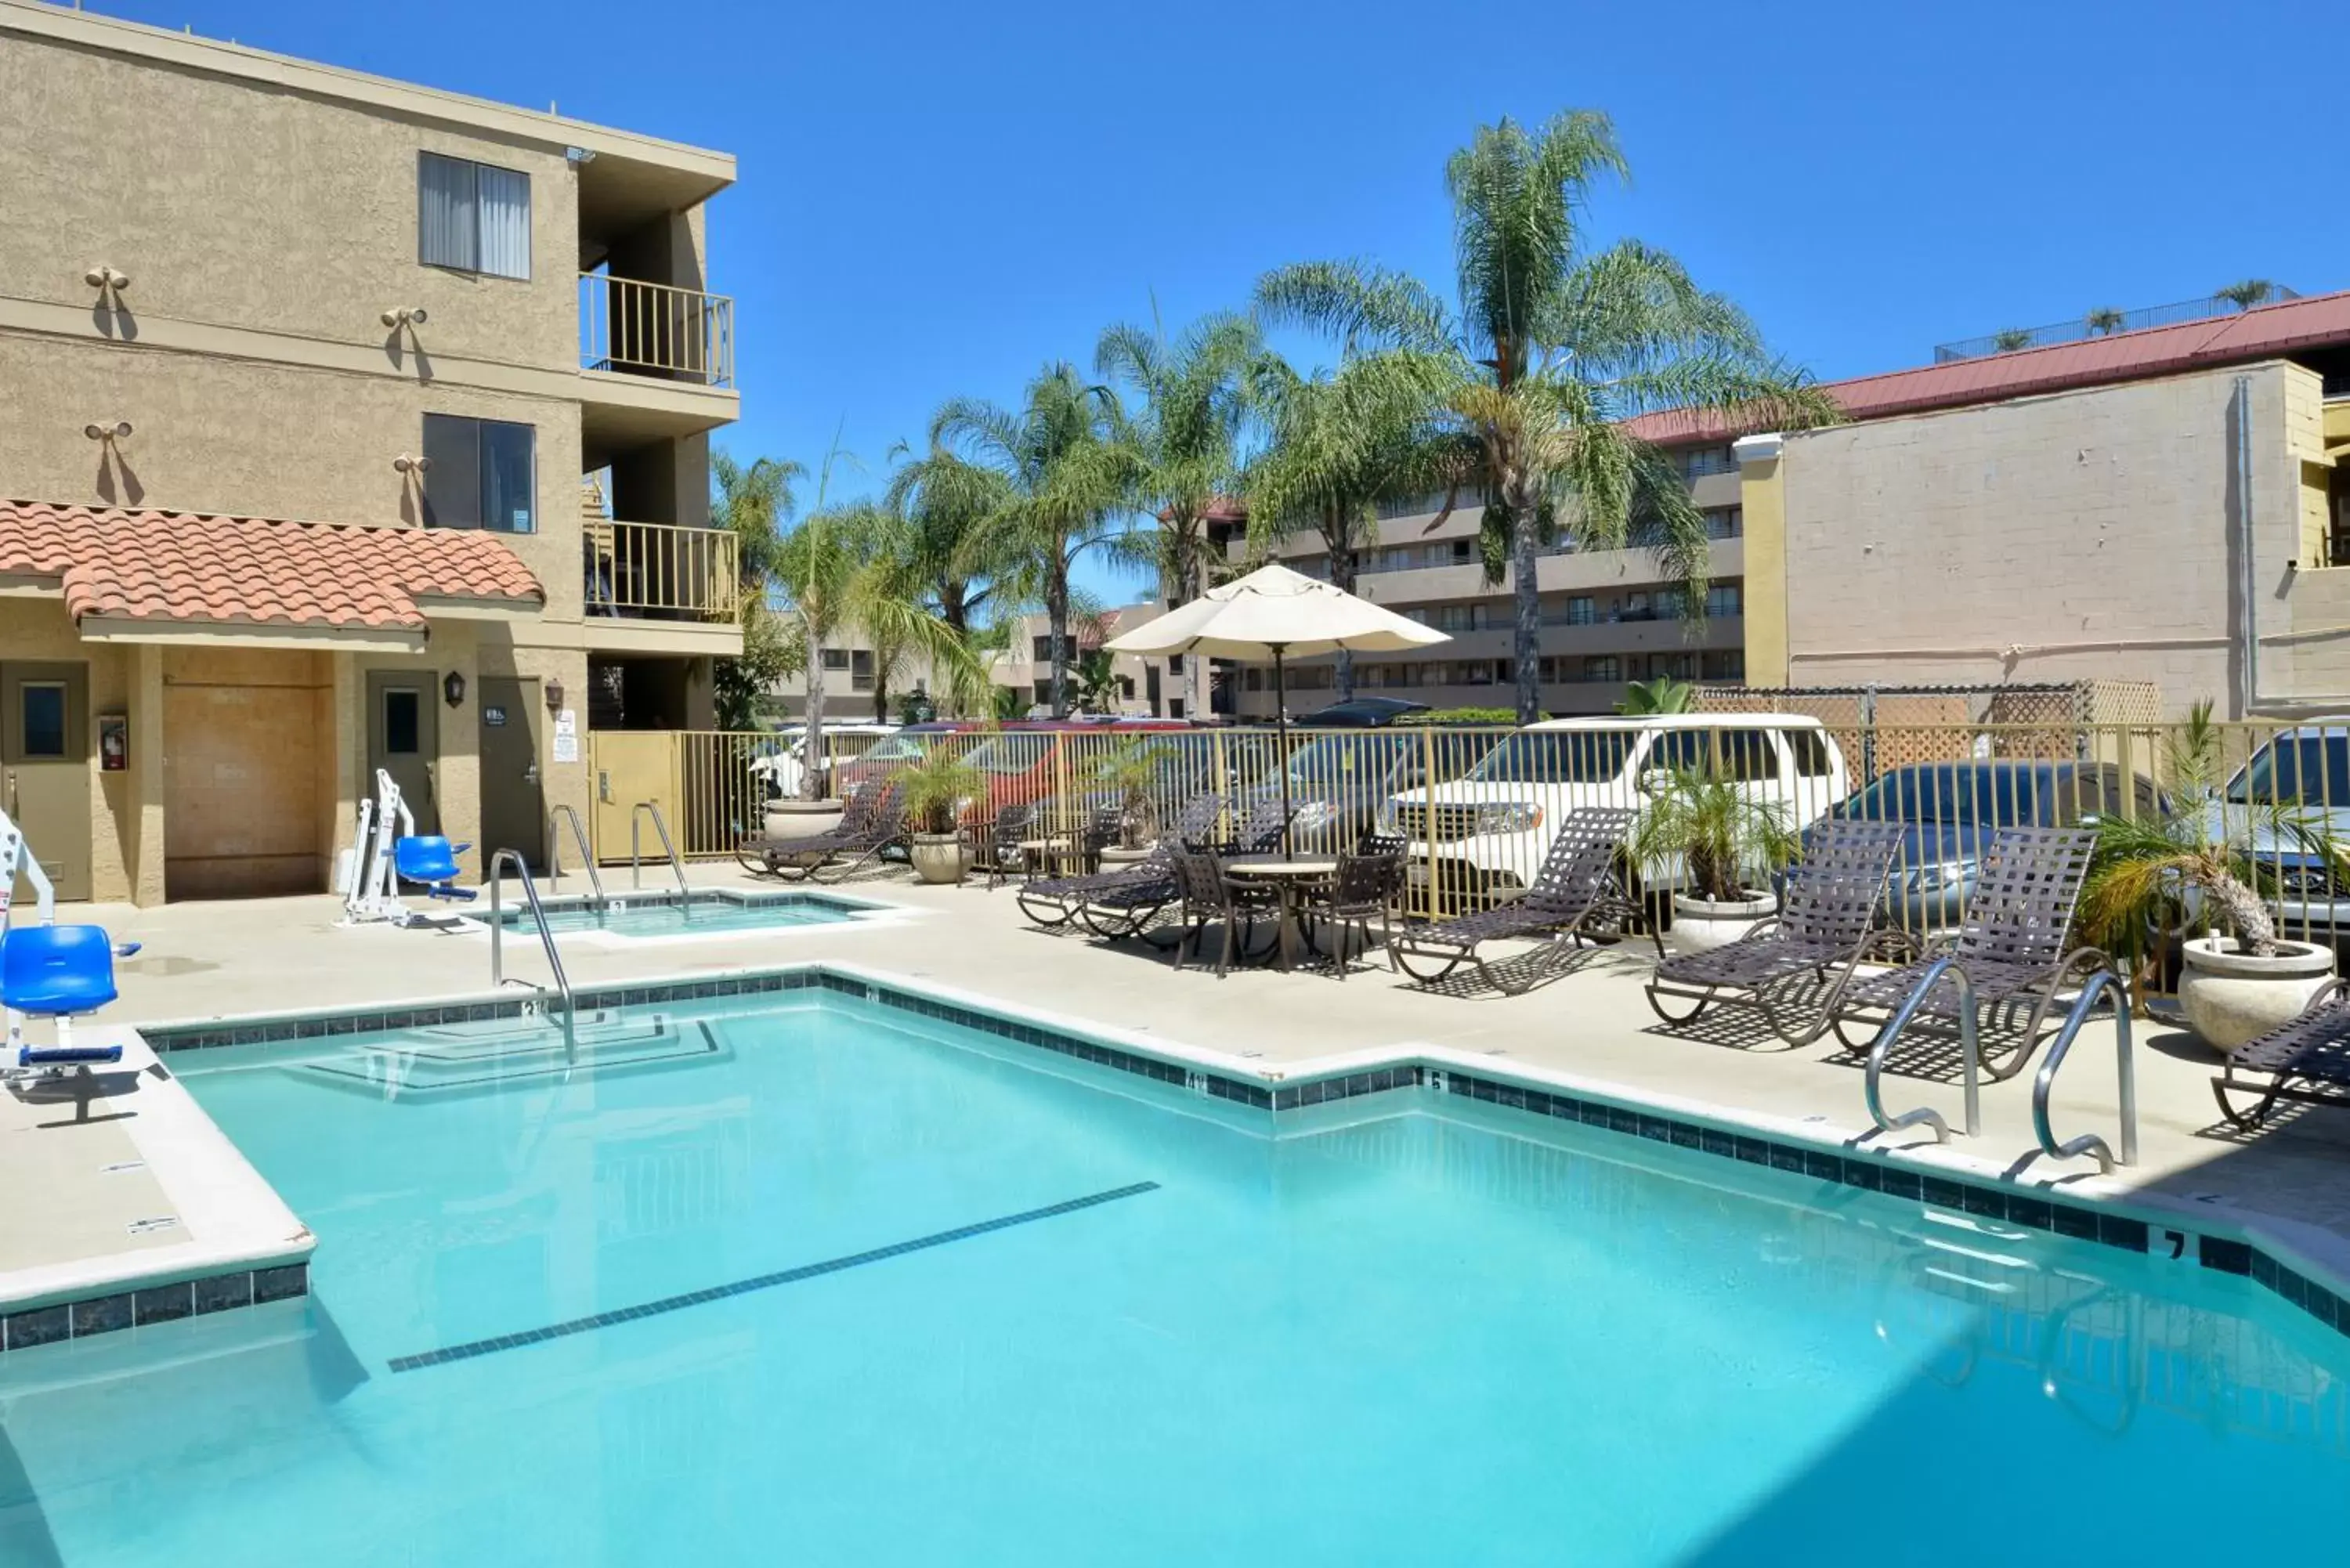 Swimming Pool in Best Western Plus Anaheim Inn